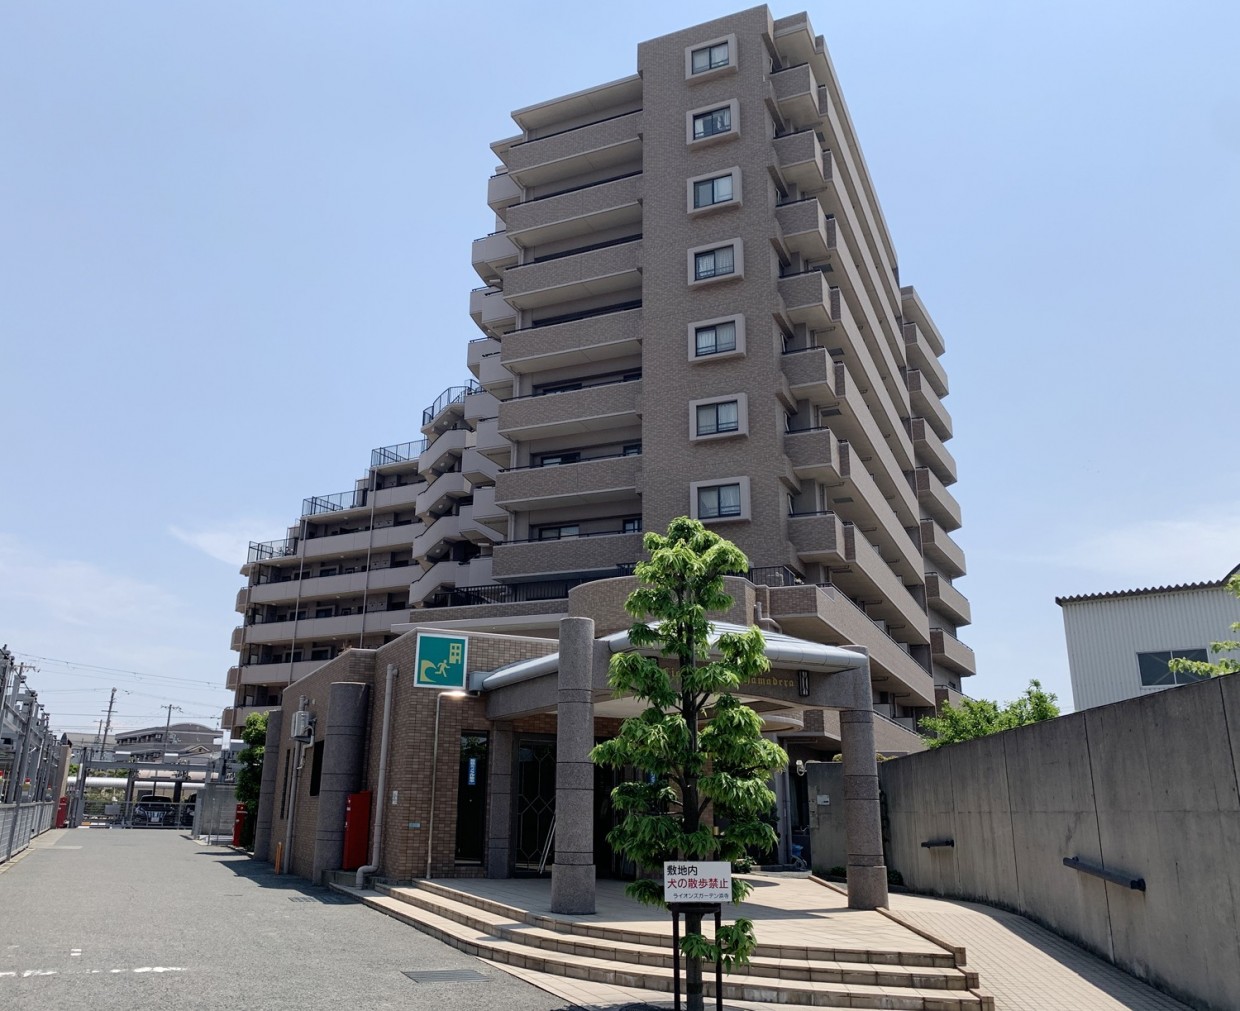 阪堺電気軌道阪堺線「石津北」駅 徒歩4分・南海本線「石津川」駅 徒歩7分の2路線アクセス可能です。